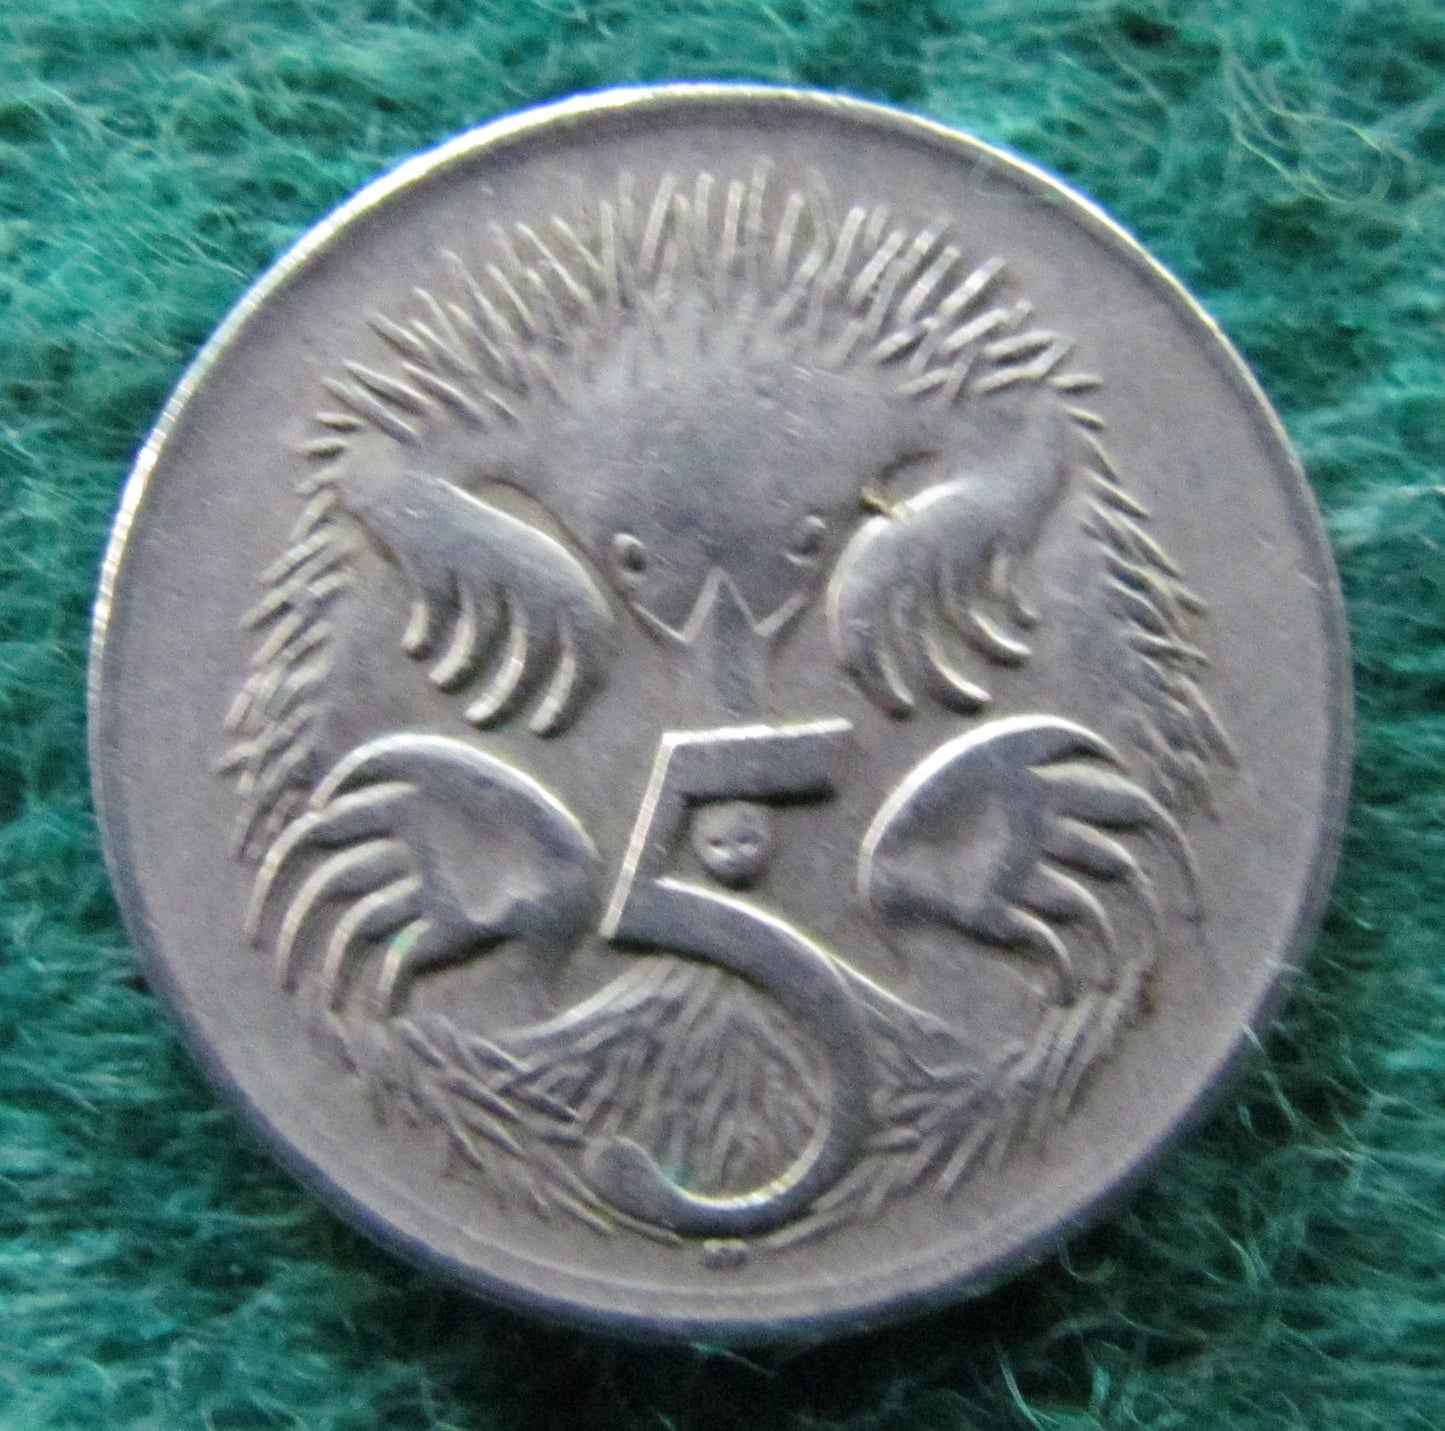 Australian 1971 5 Cent Queen Elizabeth II Coin - Circulated